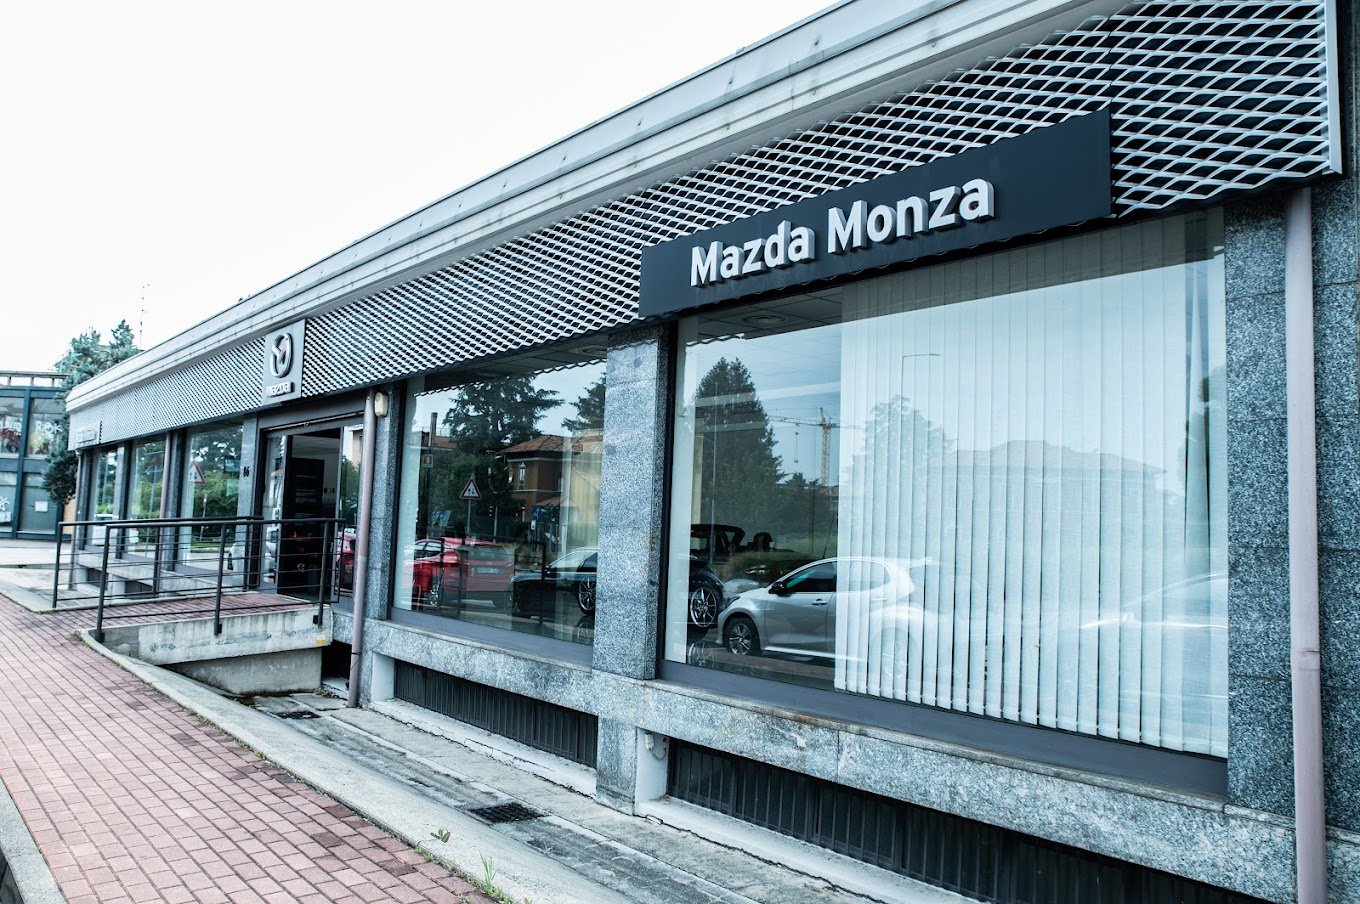 Overdrive - Mazda Monza